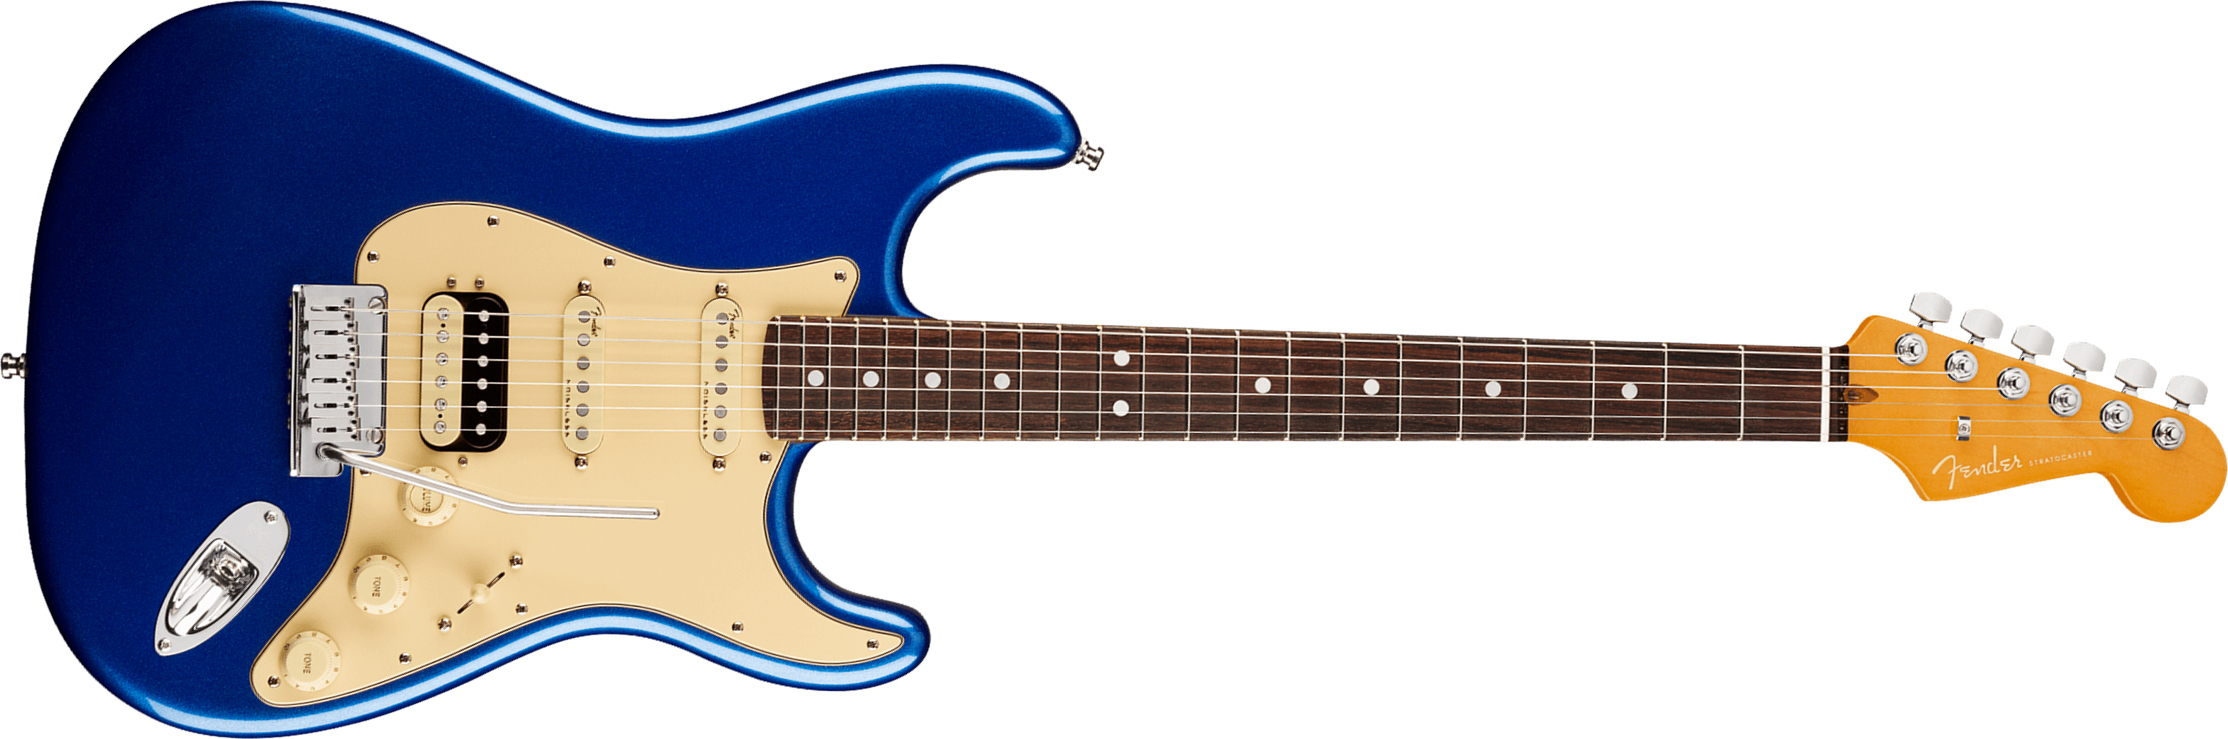 Fender Strat American Ultra Hss 2019 Usa Rw - Cobra Blue - Guitare Électrique Forme Str - Main picture